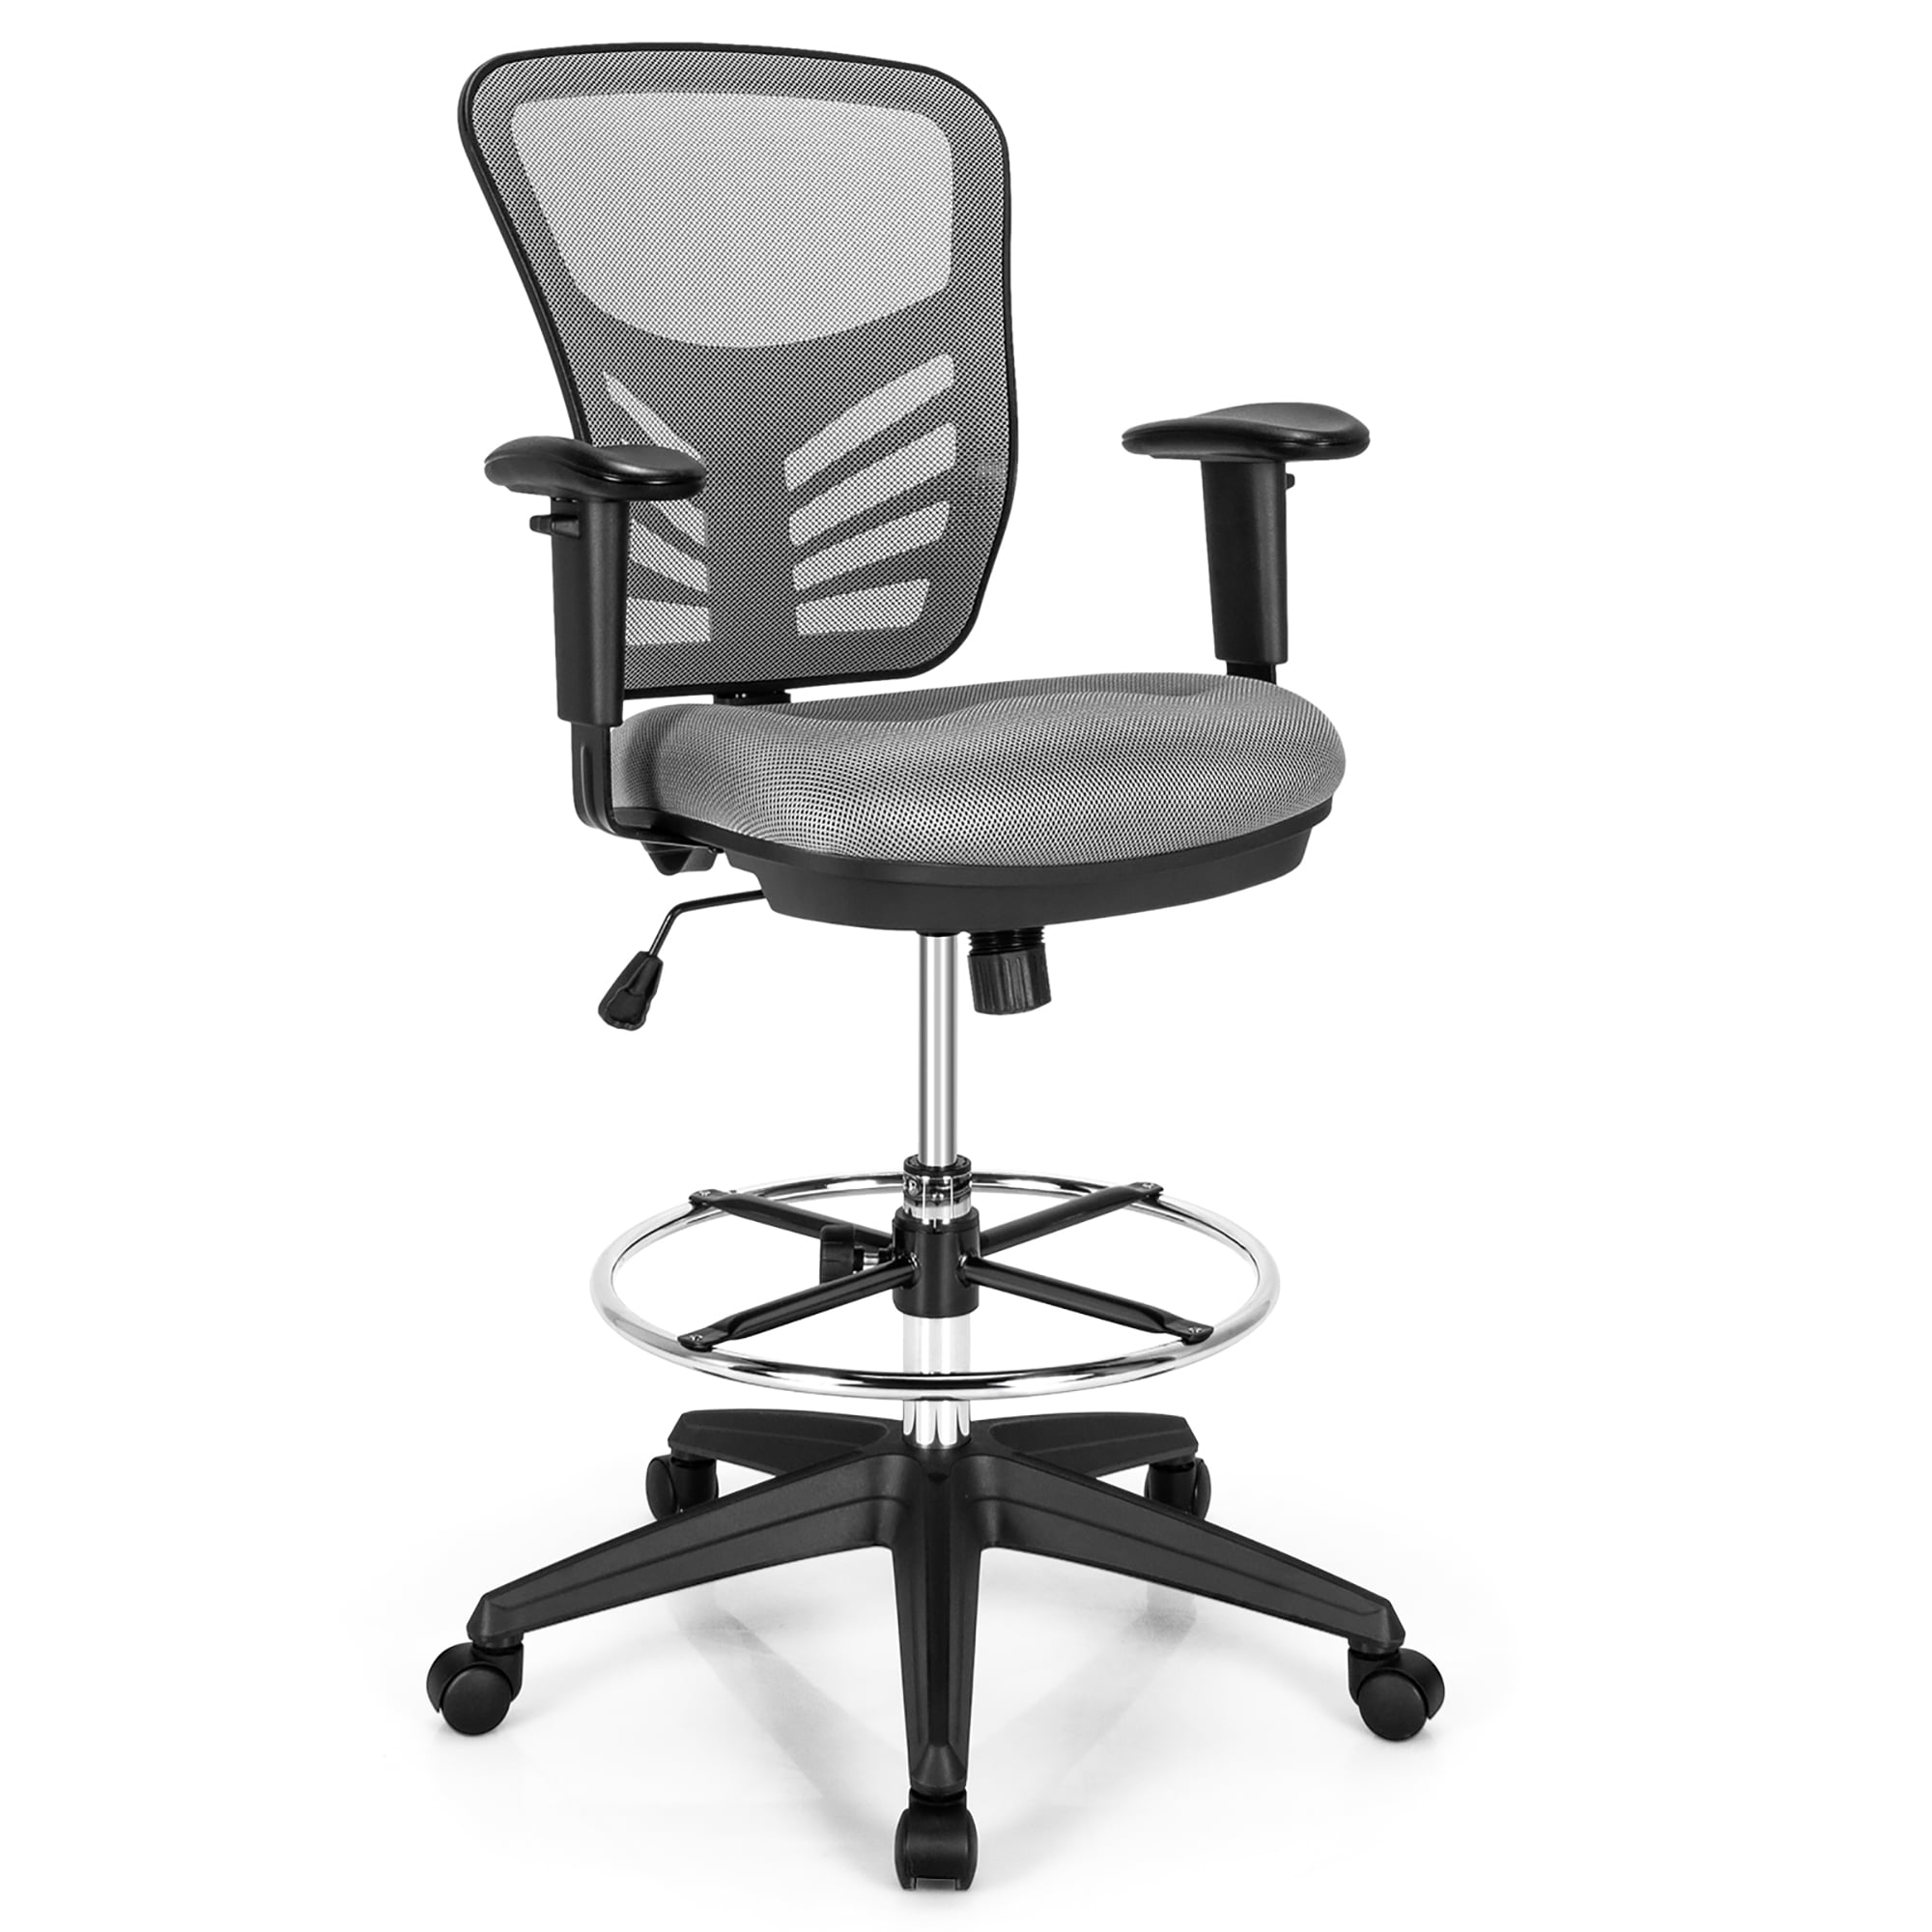 Drafting Kit - Black - OFM - DK-2 - Ergonomic Office Chair - Superchair -  OFM - 105